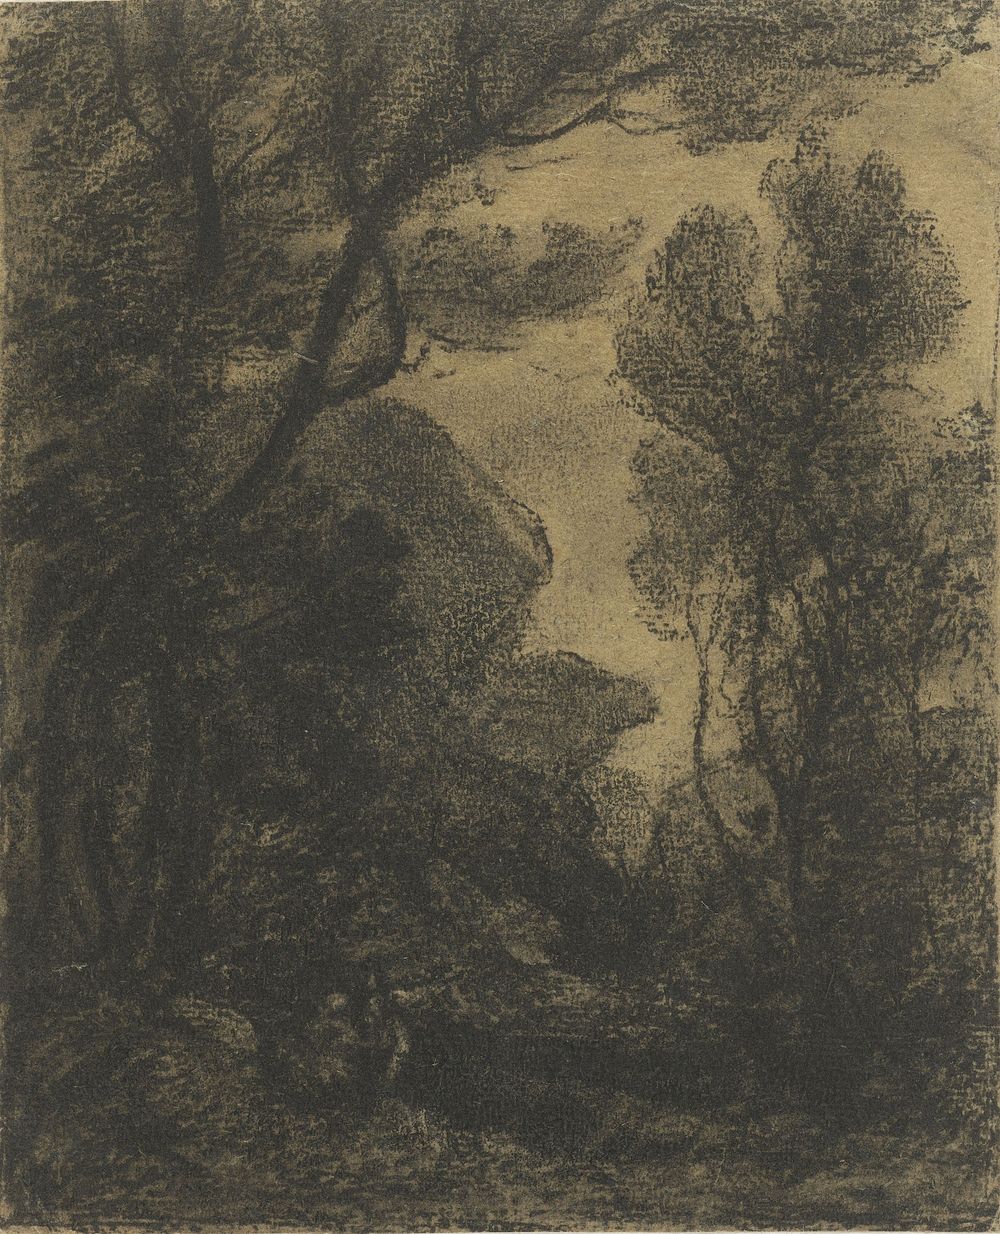 Bosgezicht bij avond (1806 - 1875) by Camille Corot